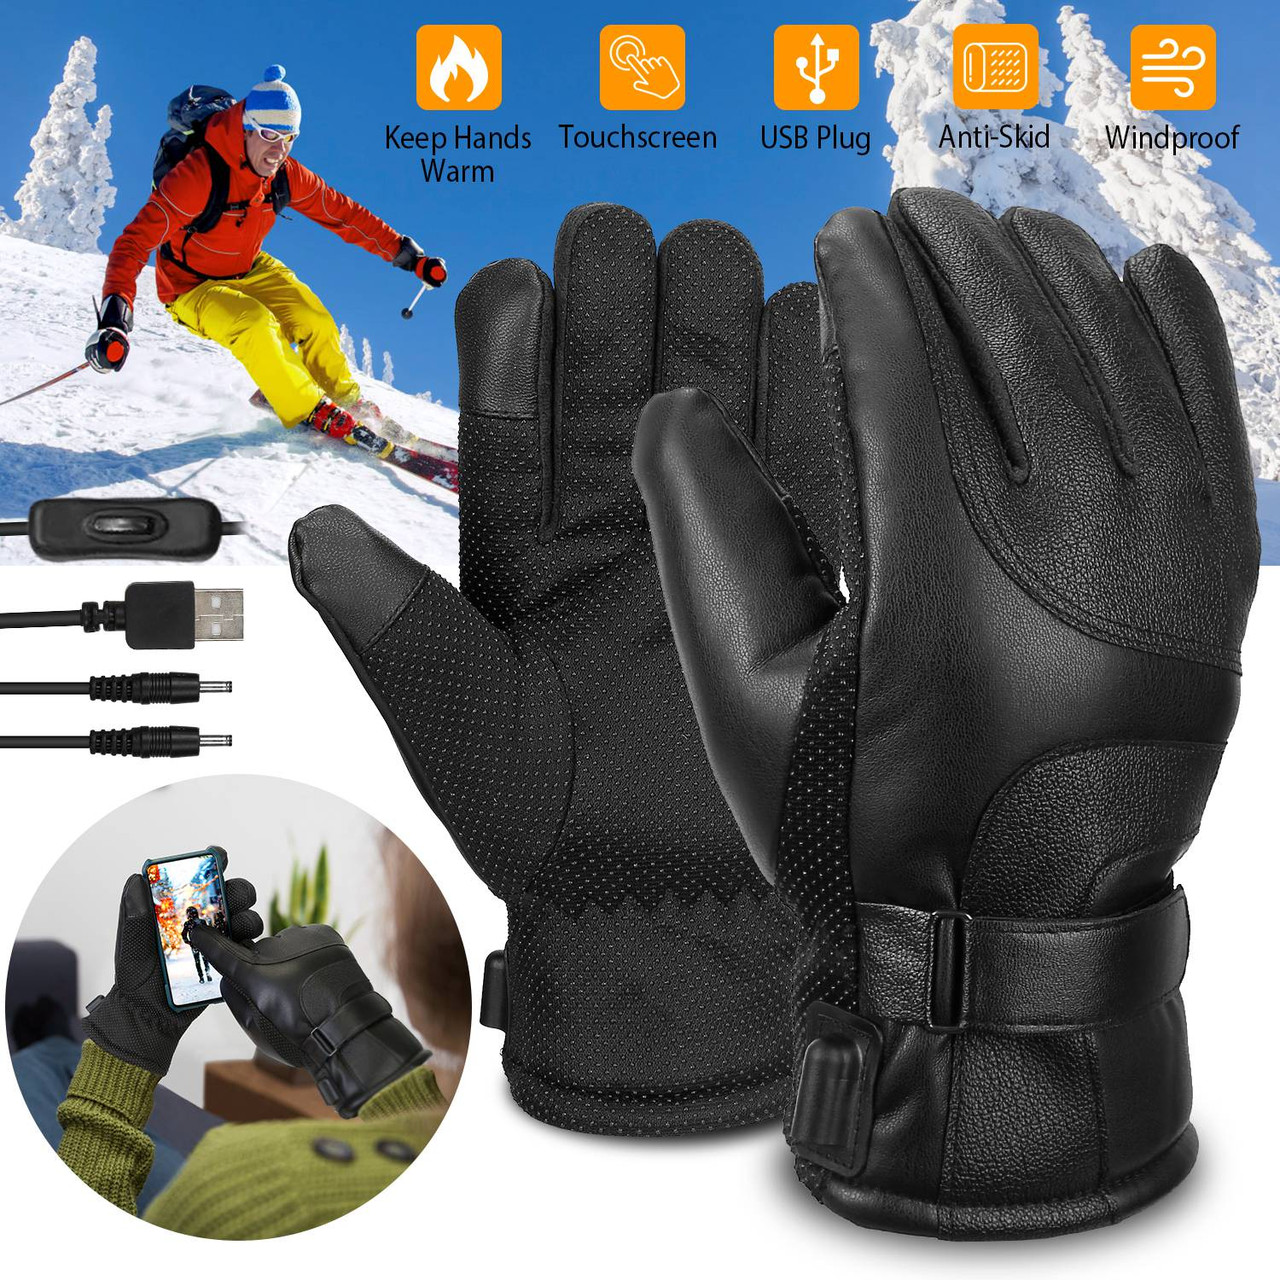 USB Heated Gloves Waterproof USB Charging Warmer Gloves For Skiing